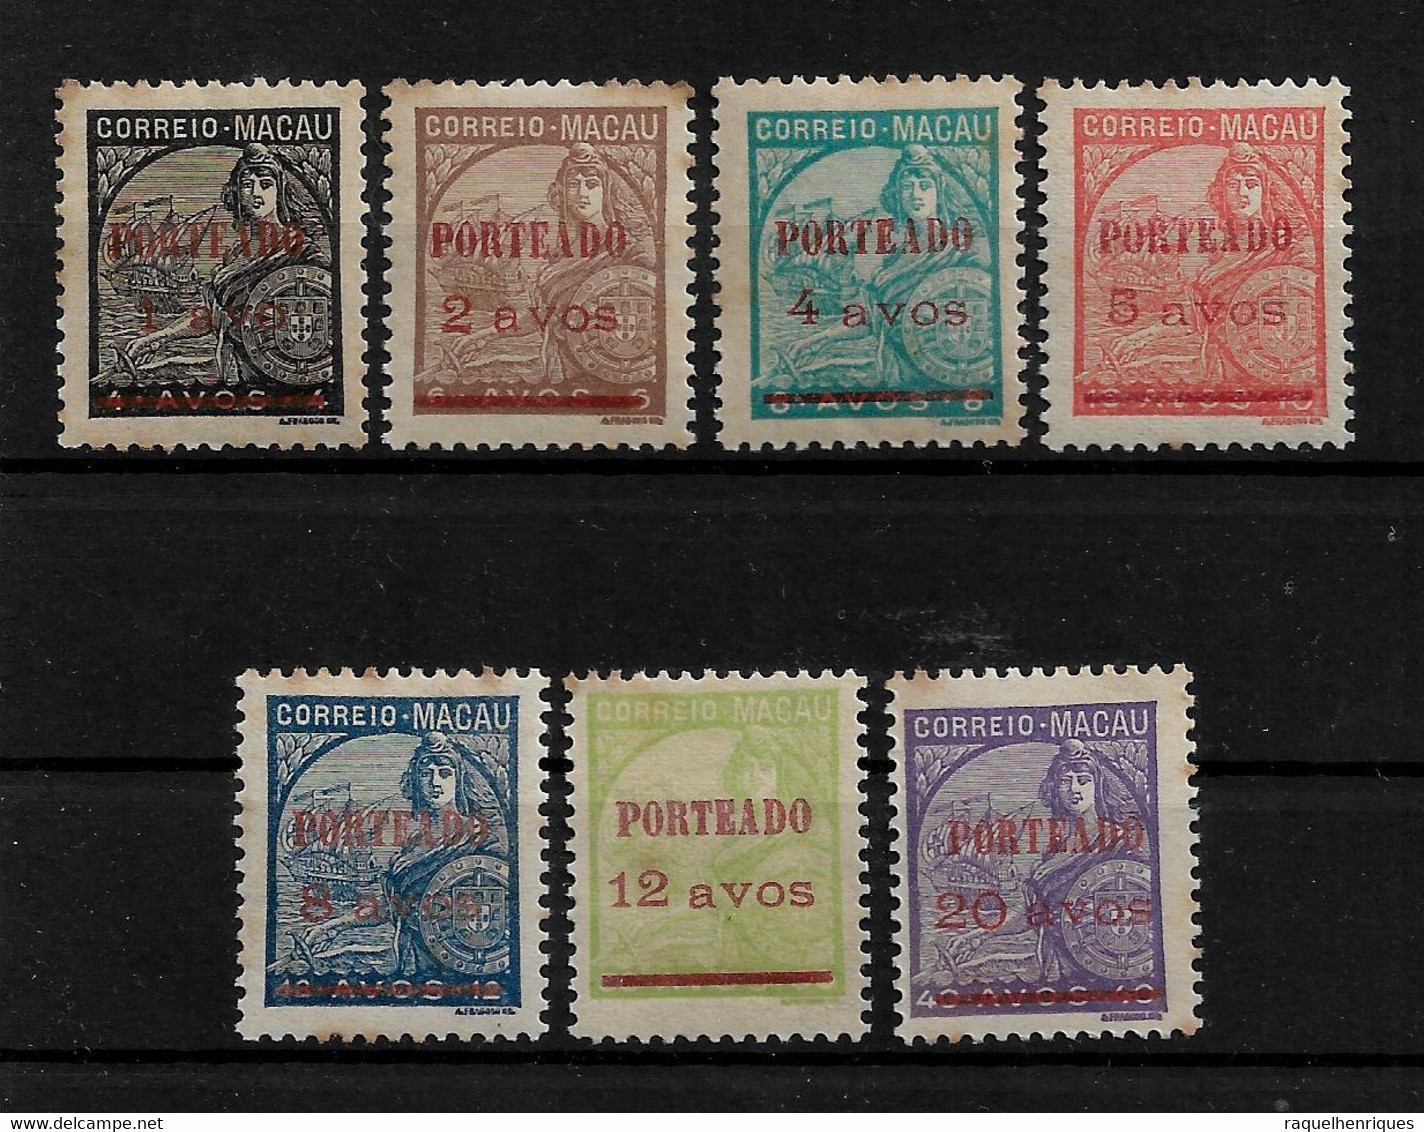 Portuguese MACAU - 1949 Macau Stamps Of 1934 Overprinted "PORTEADO" & Surcharged SET (BA5#327) - Postage Due